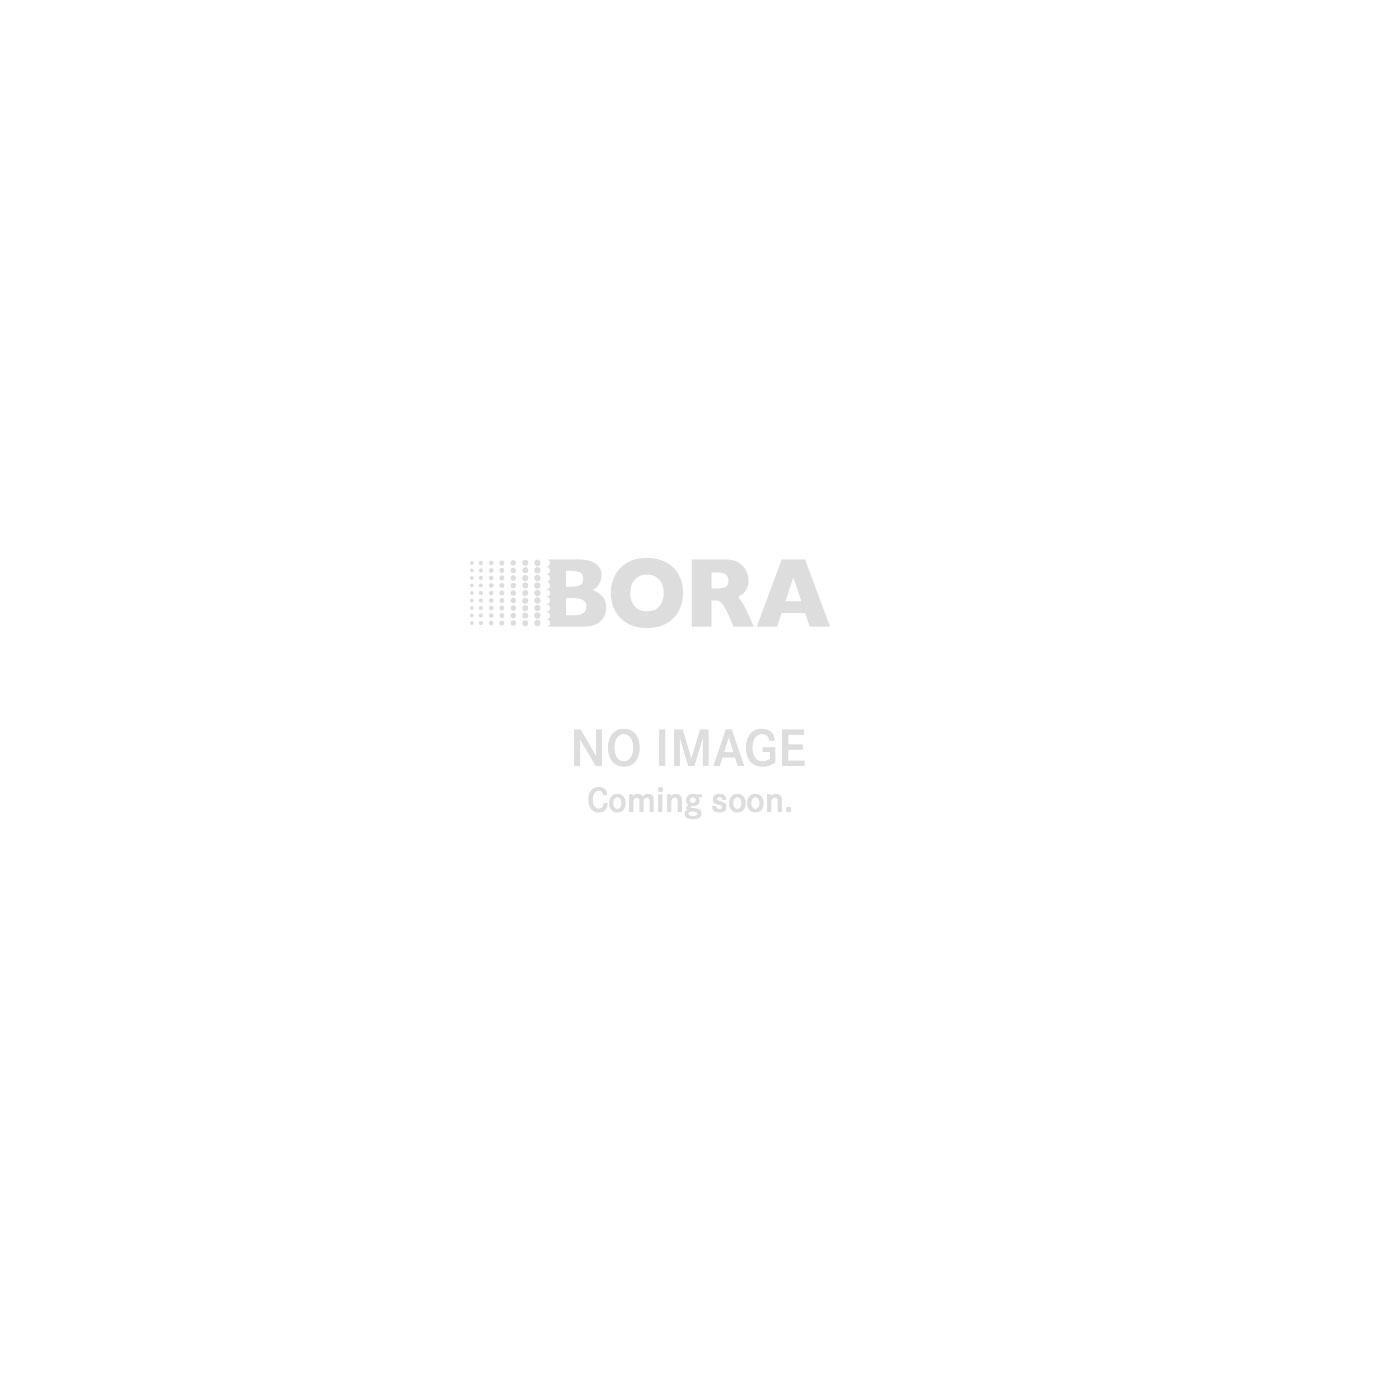 Another award for BORA Basic: German Design Award Winner 2016